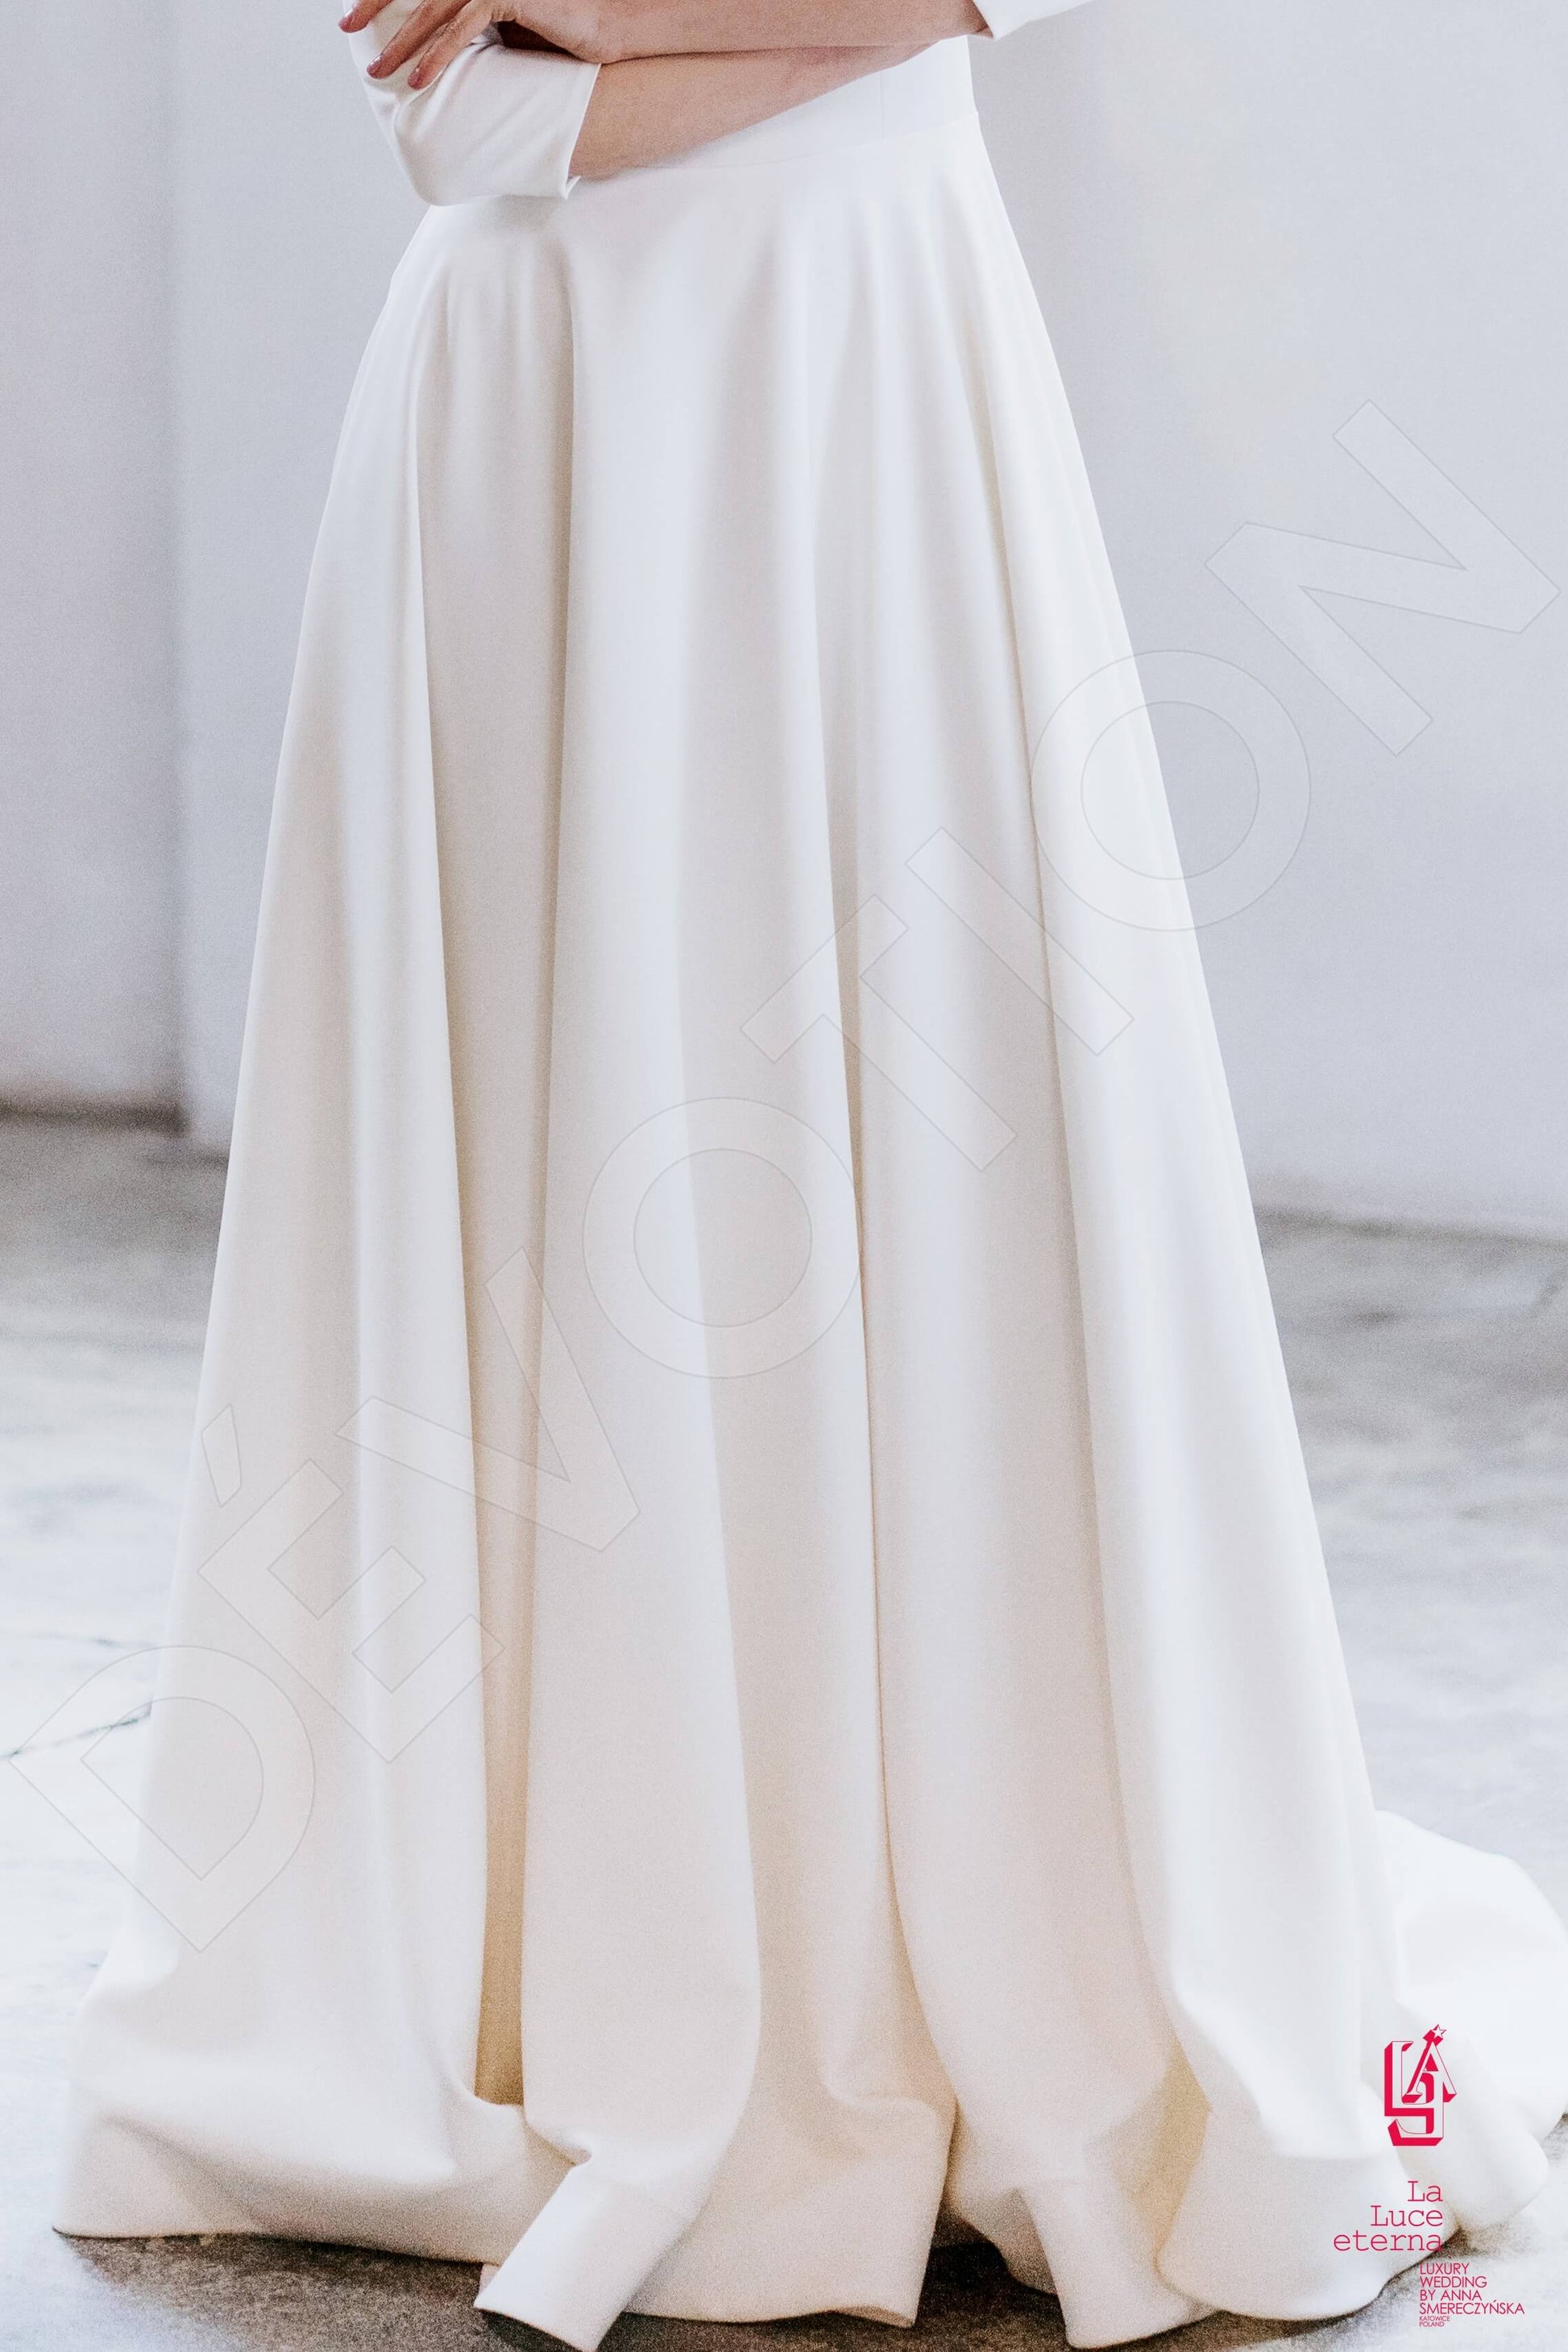 Addia A-line Boat/Bateau Ivory Wedding dress